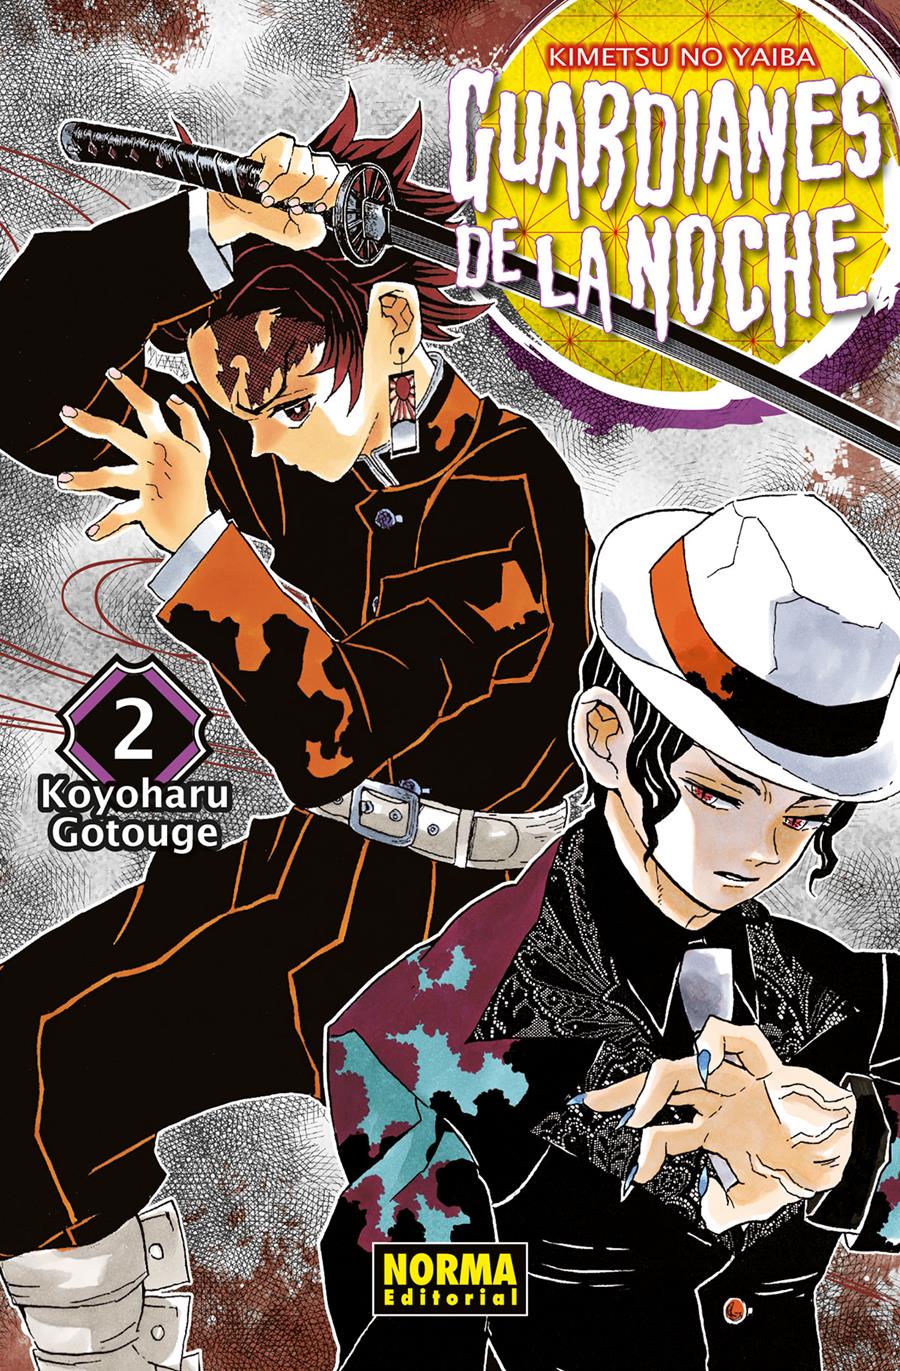 Guardianes de la noche 02 | N0519-NOR44 | Koyoharu Gotouge | Terra de Còmic - Tu tienda de cómics online especializada en cómics, manga y merchandising